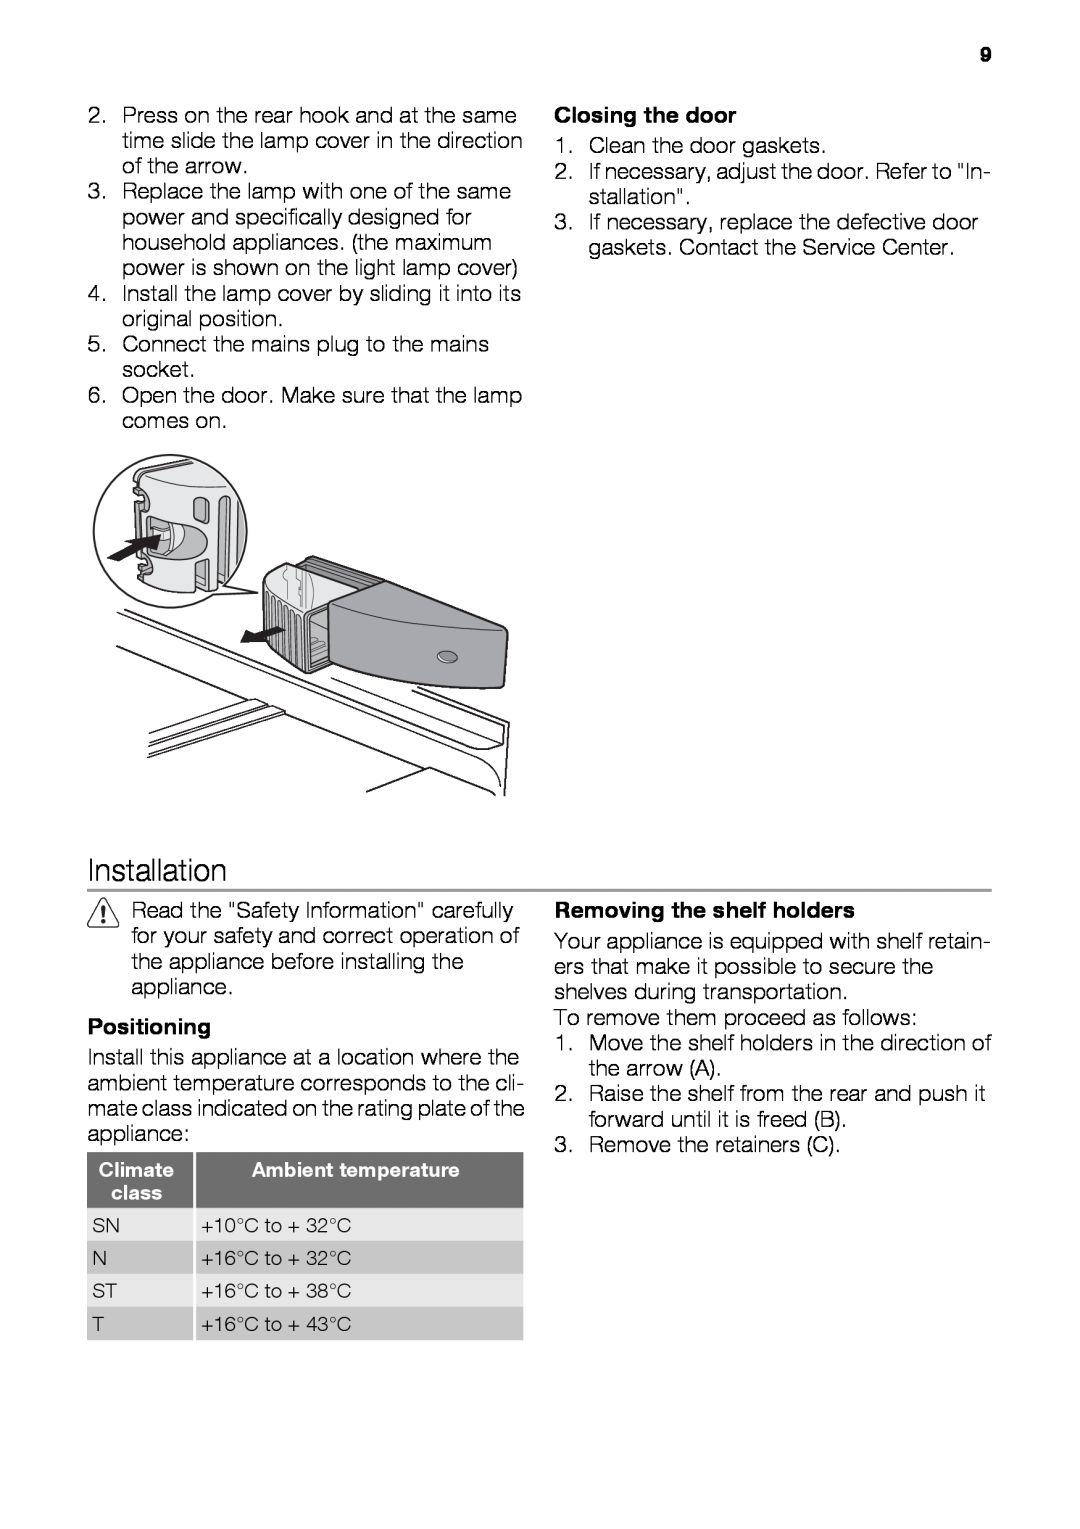 Kuppersbusch USA IKE339-1 user manual Installation, Closing the door, Positioning, Removing the shelf holders 